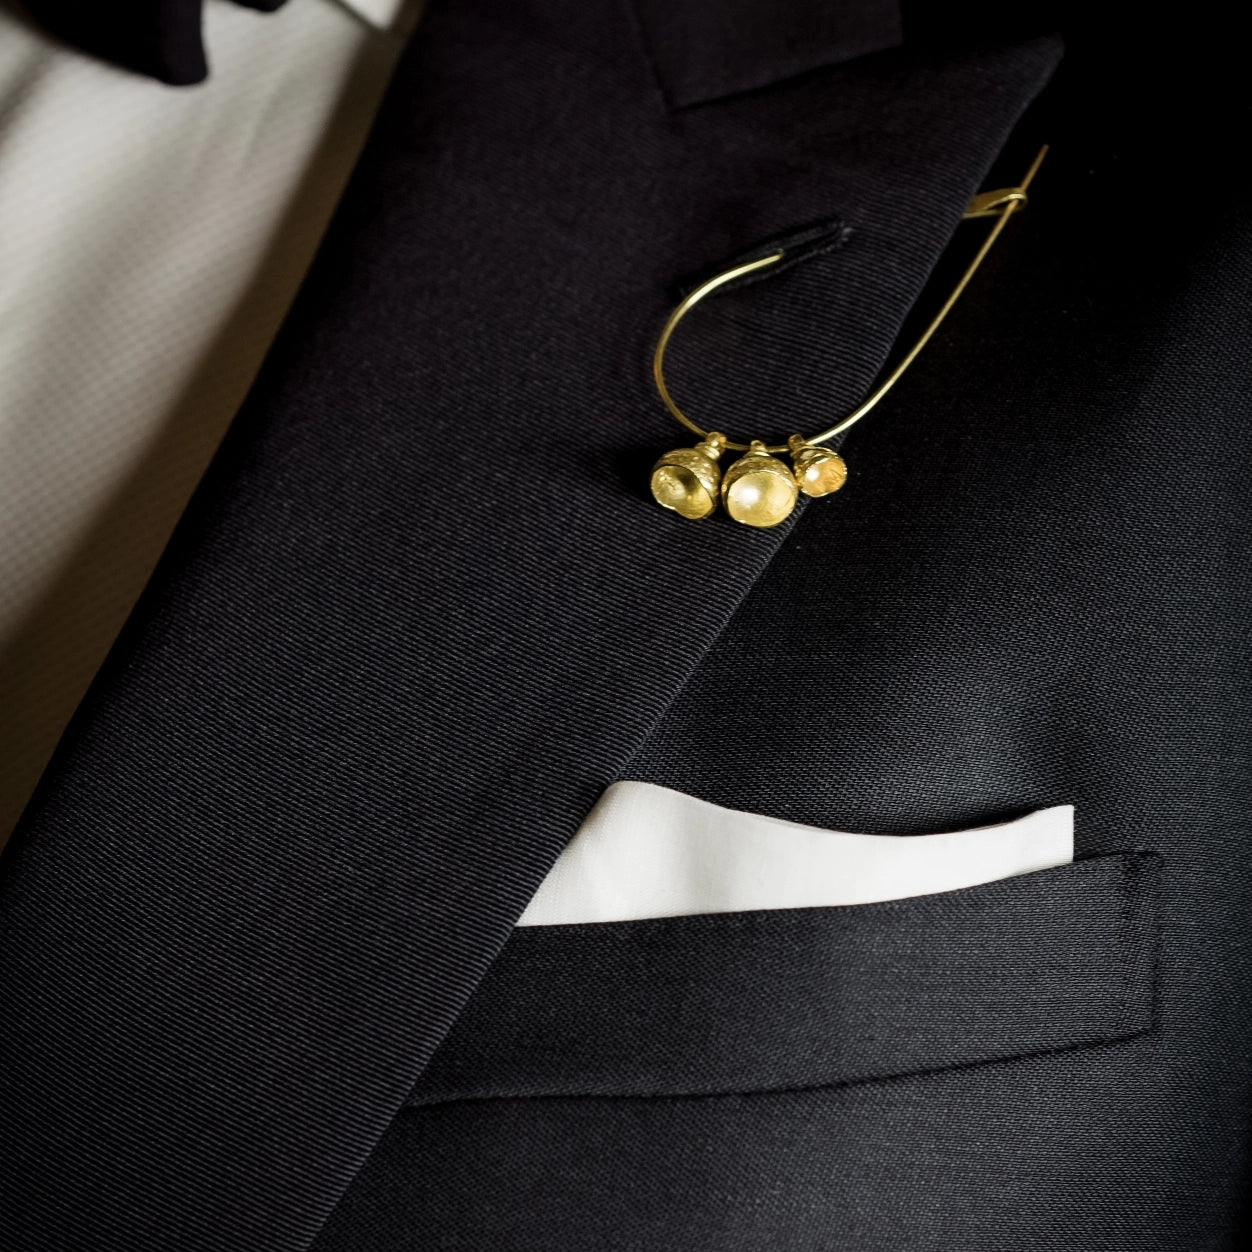 Wright & Teague Tempo bells pin. 18ct Fairtrade gold. Worn through the button hole of a dark grey suit.